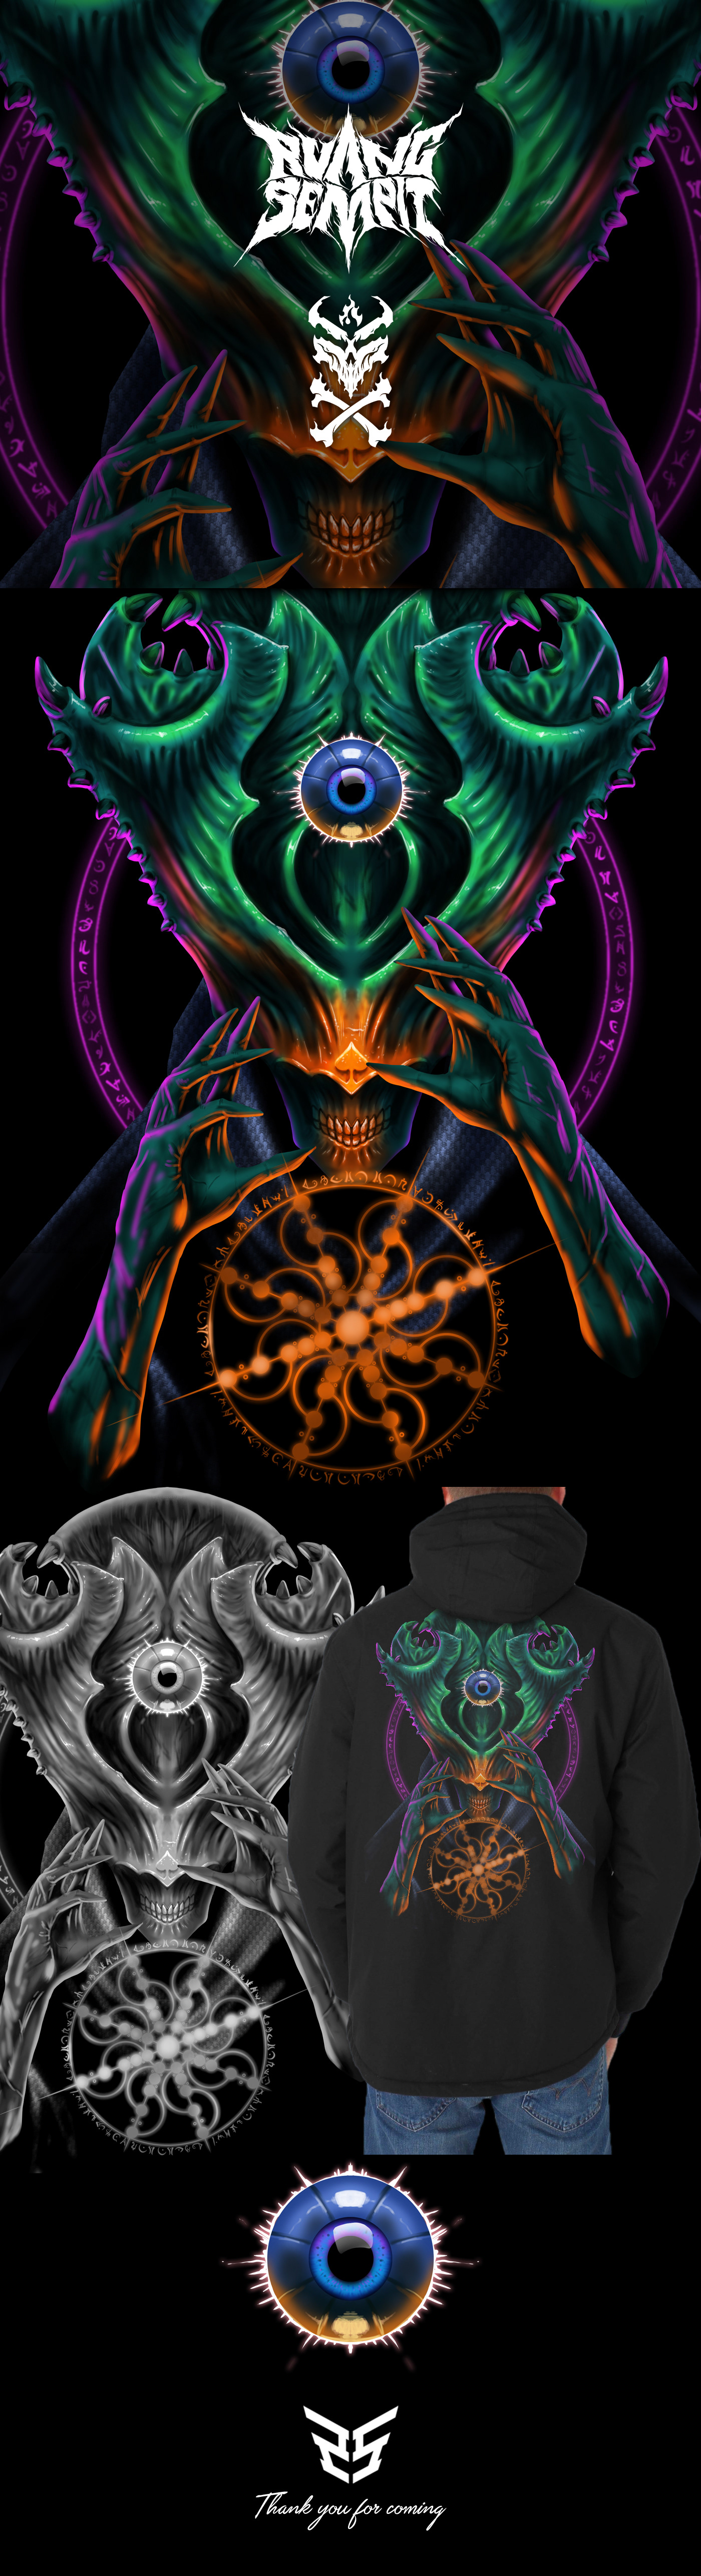 monster darkart horror merchandise apparel Clothing Blackmetal Deathmetal artwork concept art